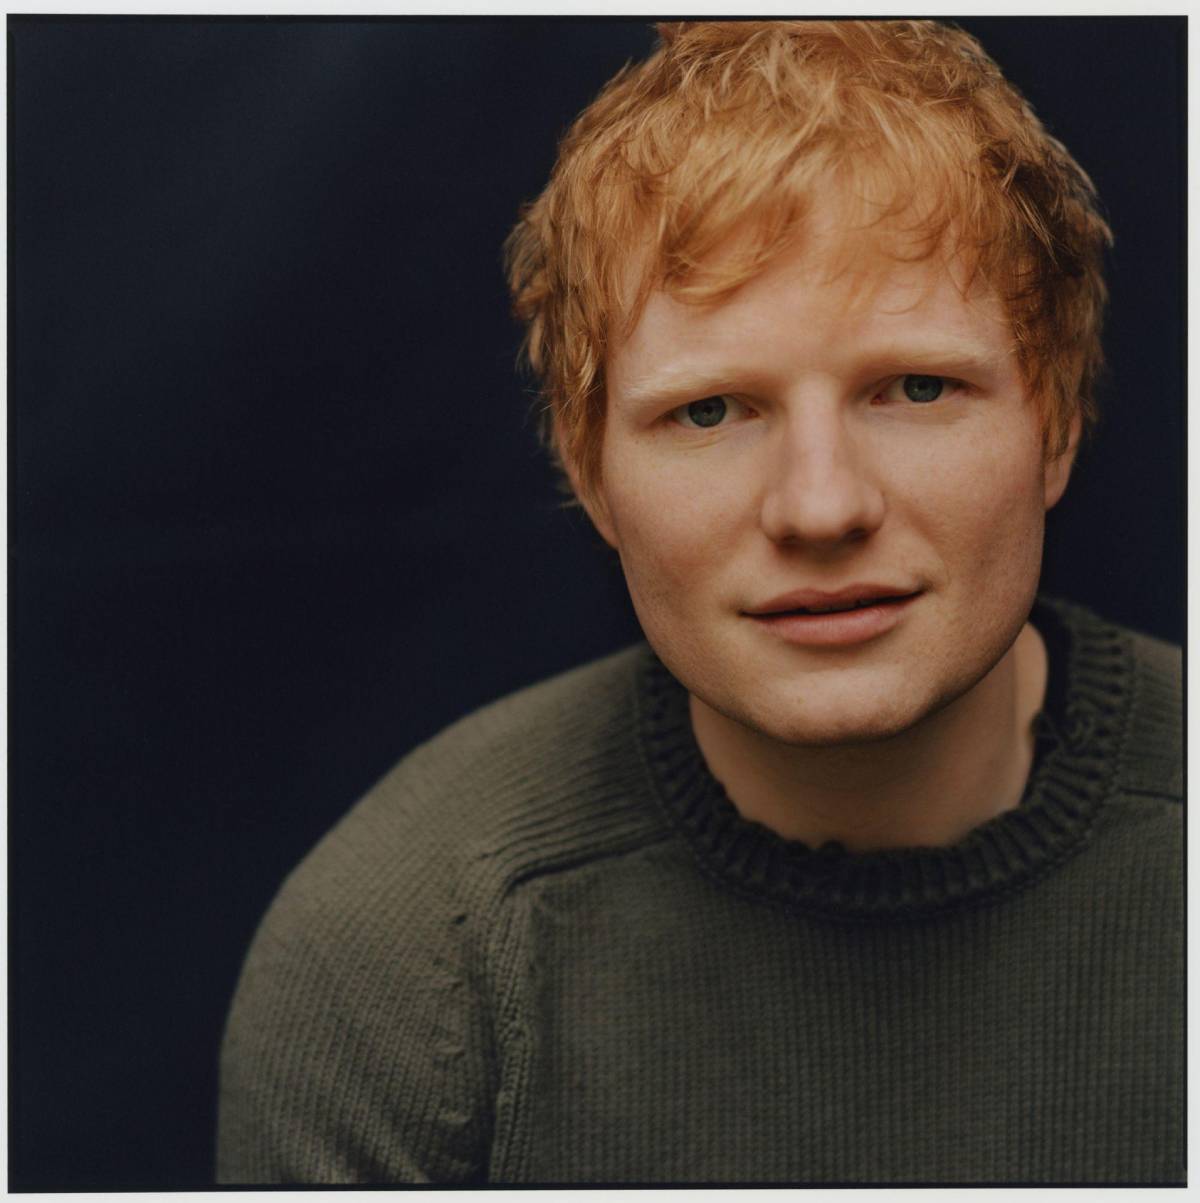 Ed Sheeran teases upcoming album with ‘Bad Habits’ single